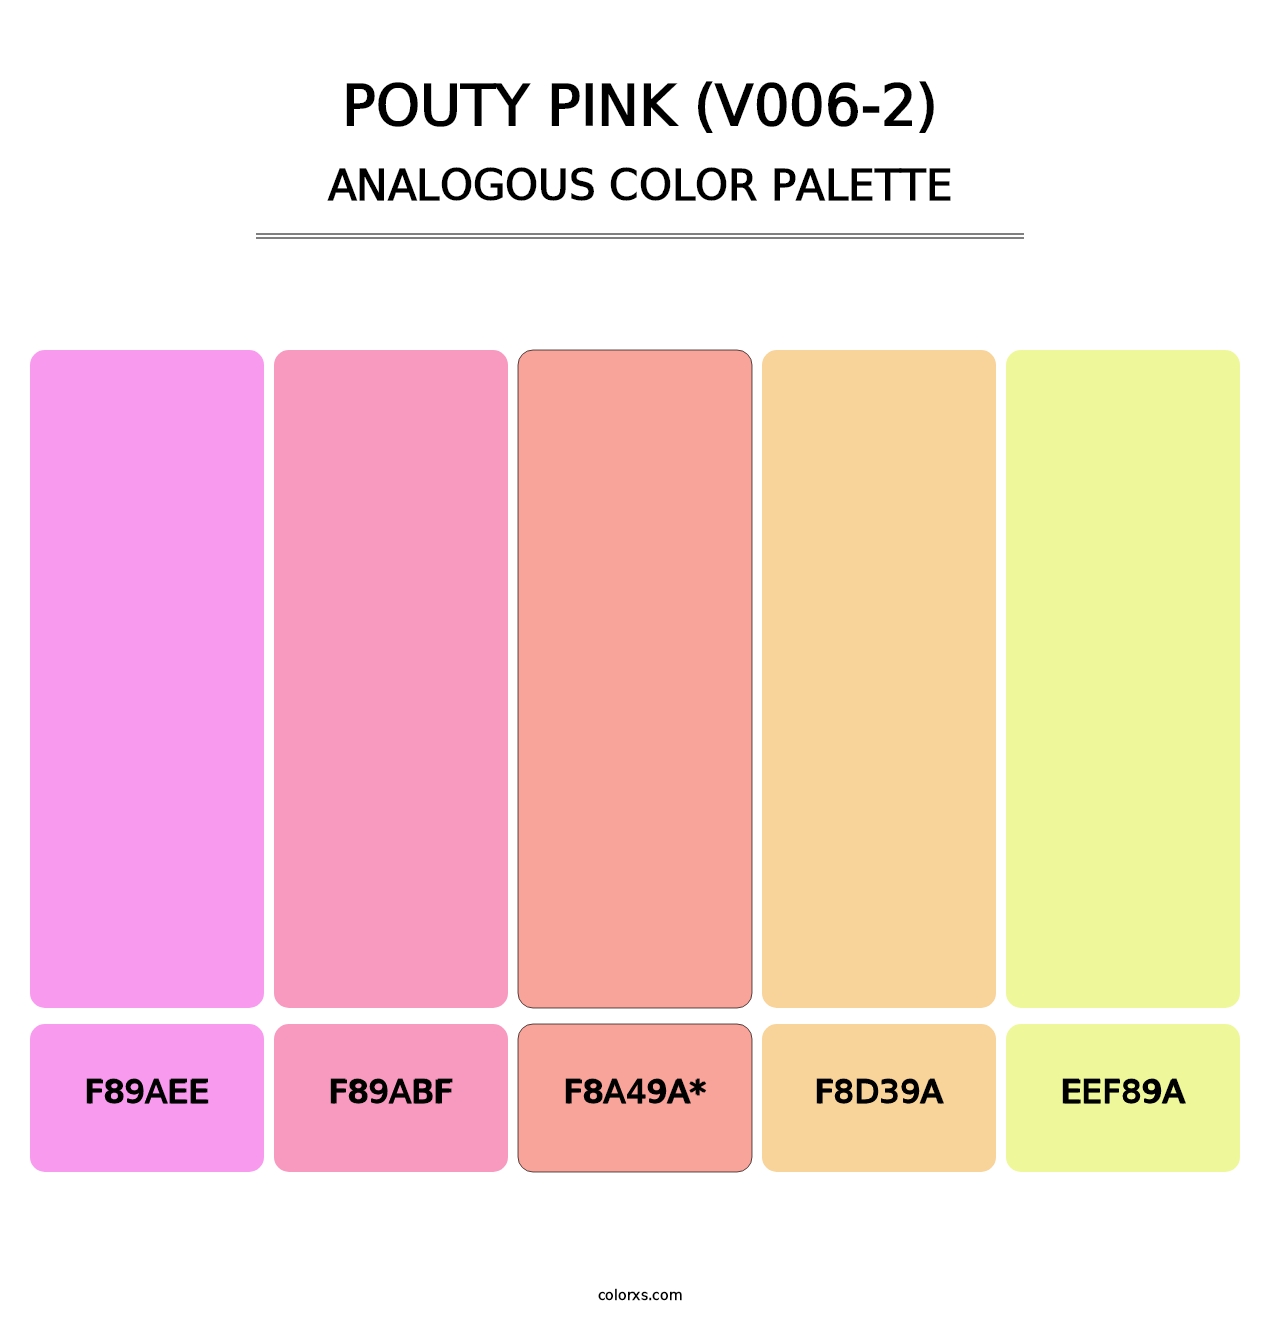 Pouty Pink (V006-2) - Analogous Color Palette